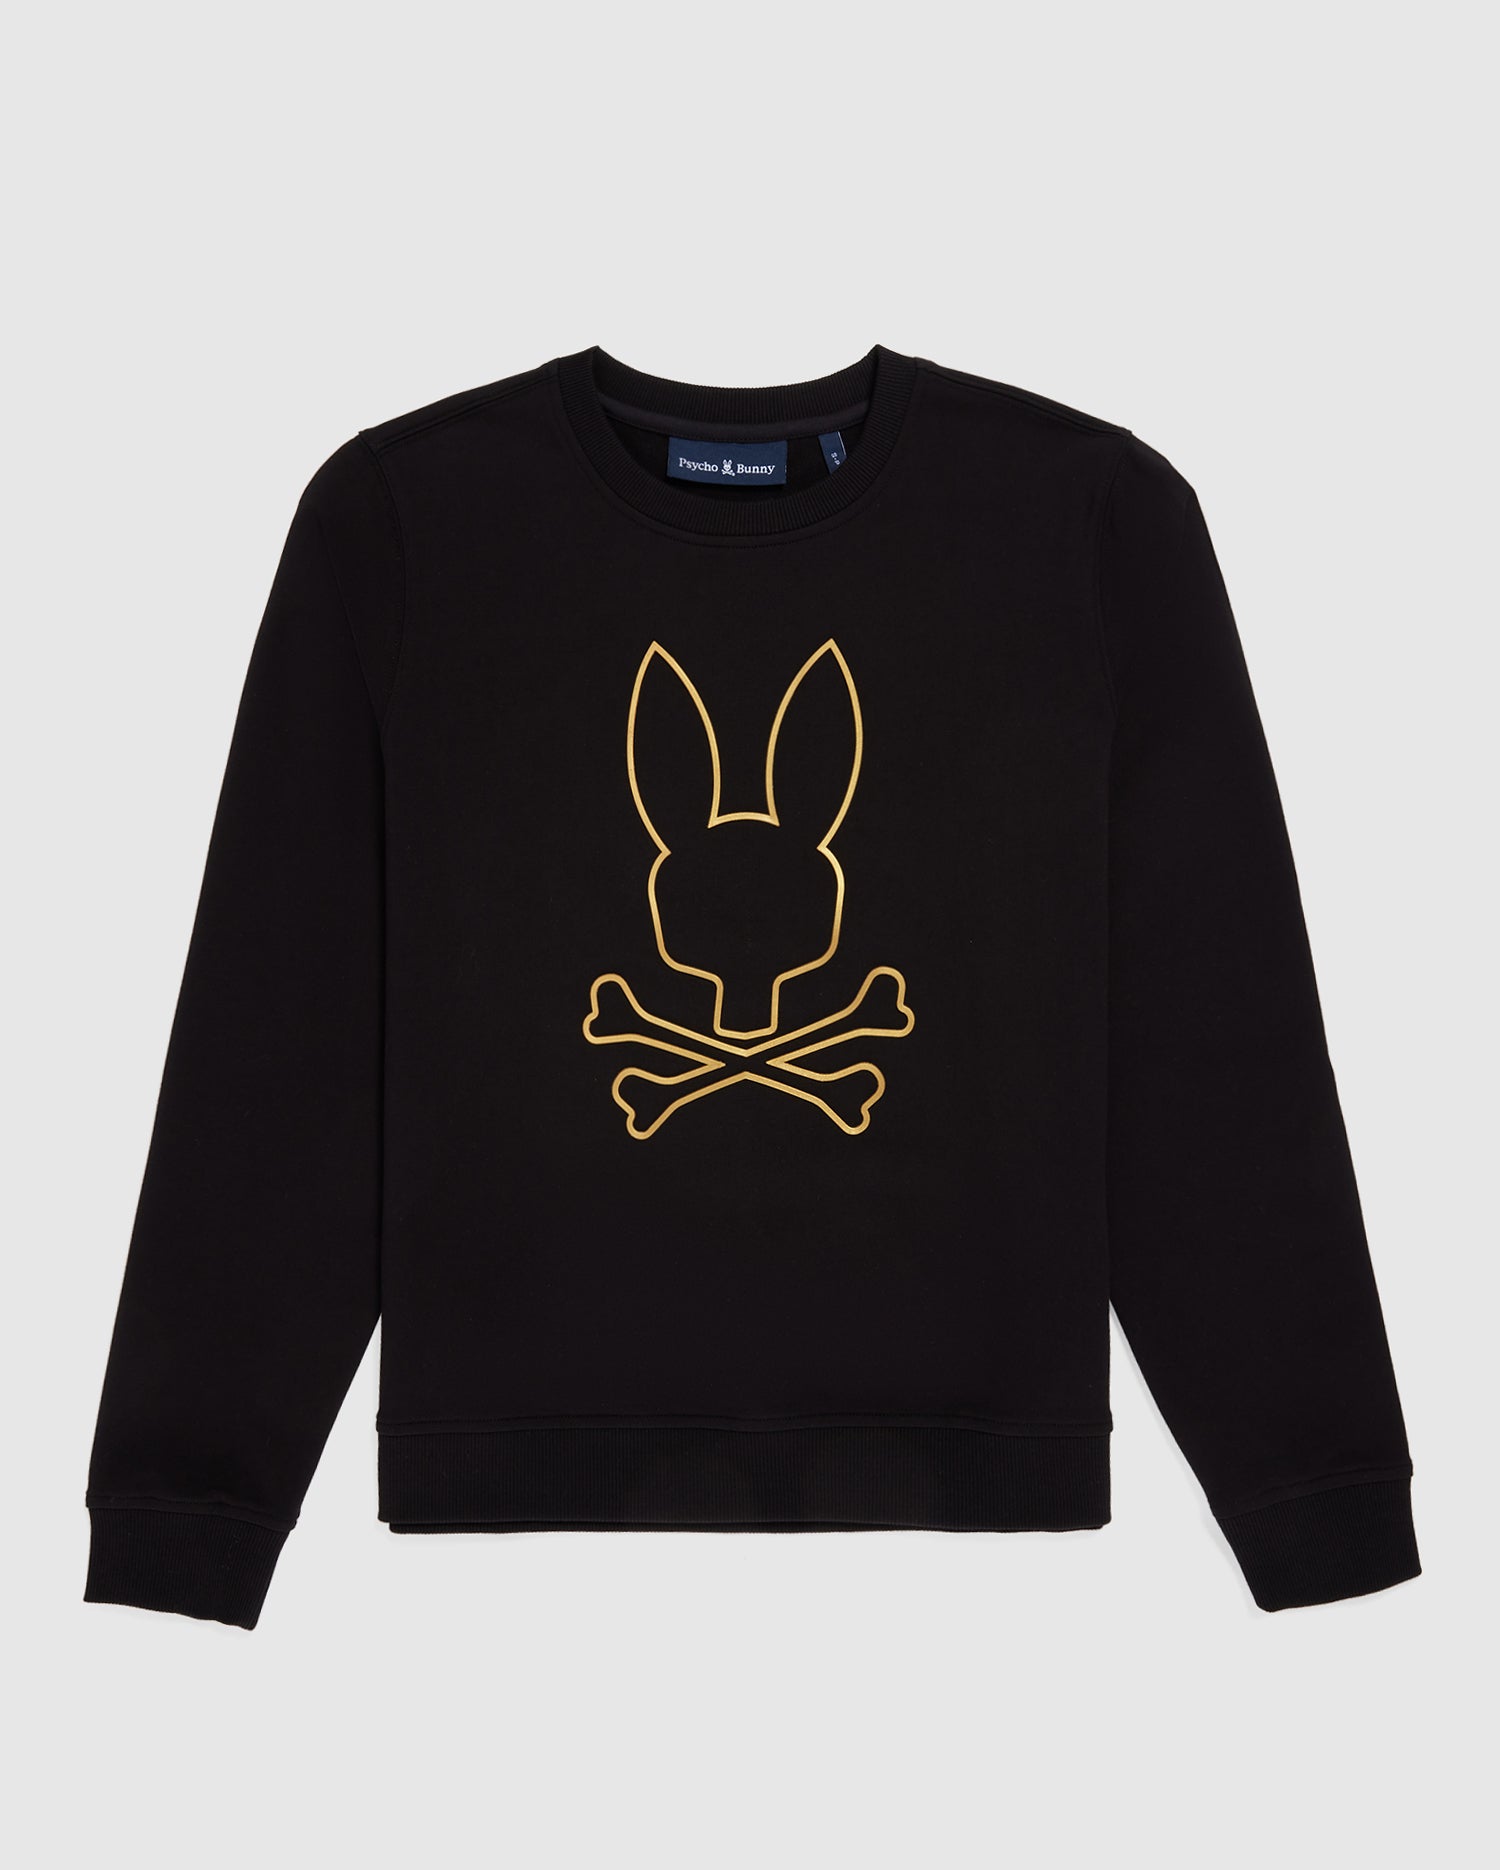 Women's Clothing & Apparel | Tees | Sweatshirts | Psycho Bunny